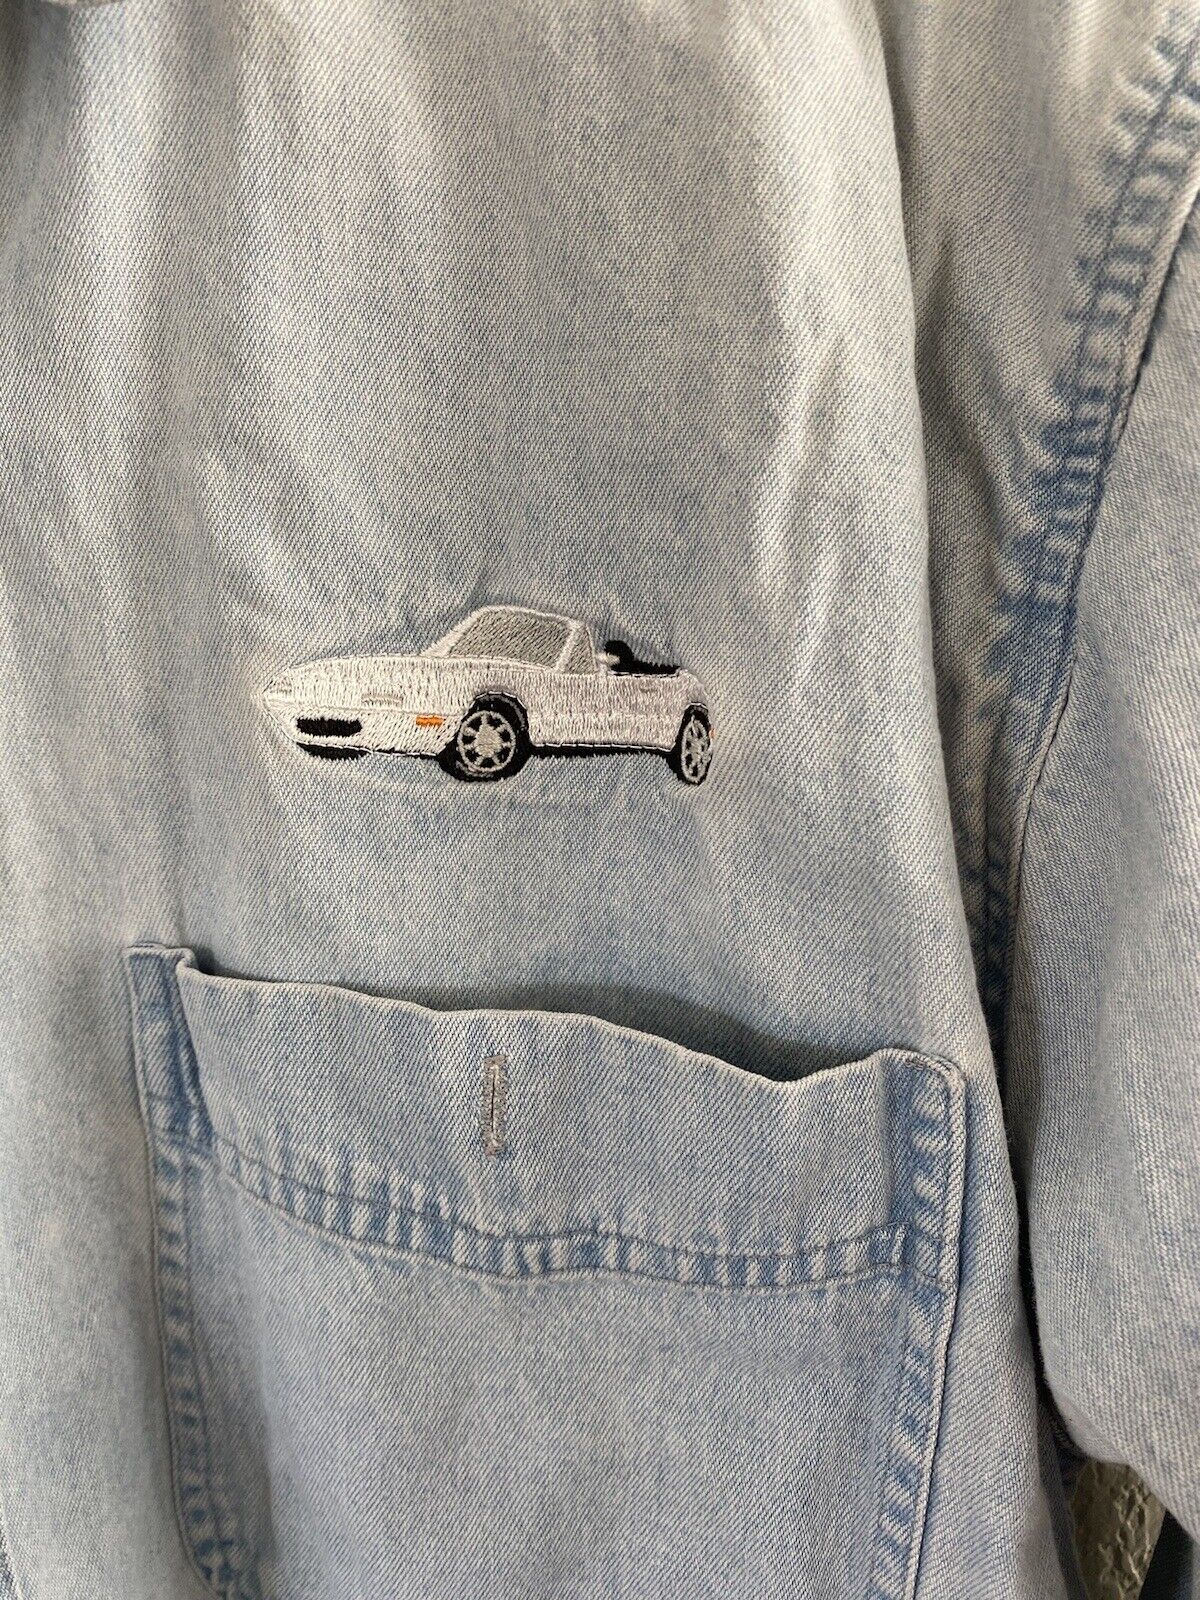 Vintage Denim Button Down with Car Detail - Unbranded - Men's Large